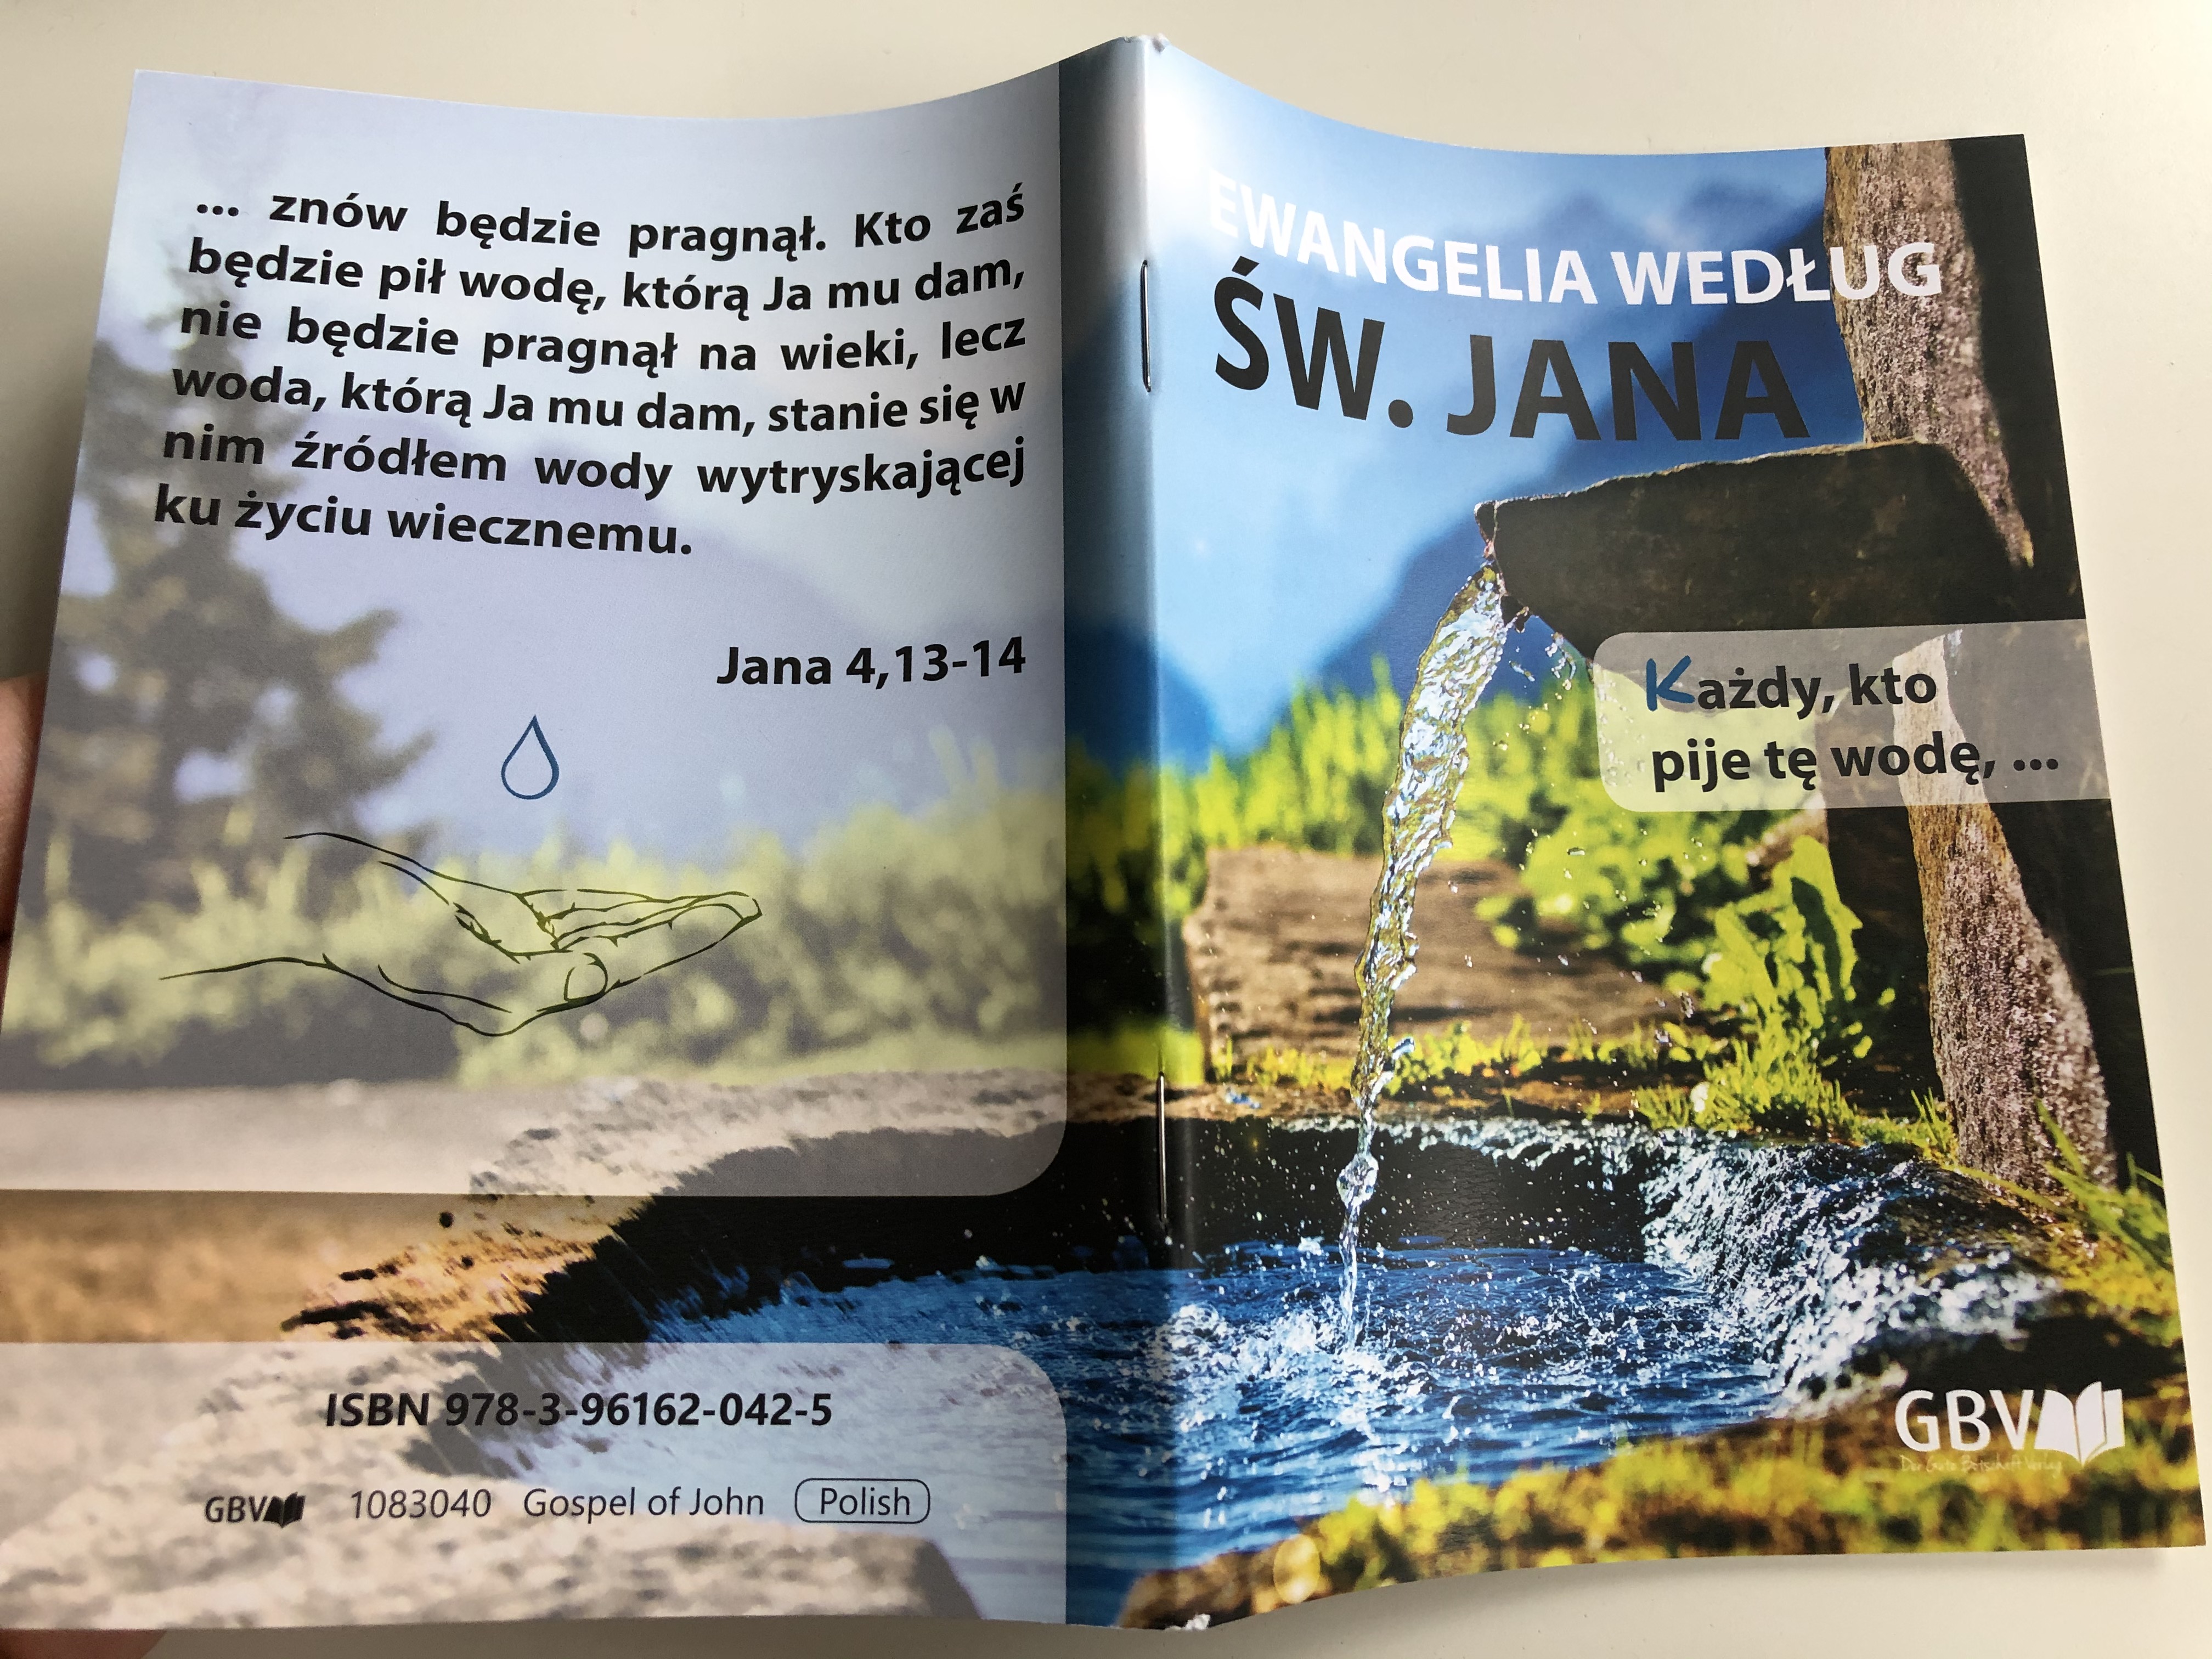 Ewangelia Wedlug Sw. Jana / Polish language Gospel of John / Gute Botschaft  Verlag 2017 / GBV 1083040 / Paperback - bibleinmylanguage